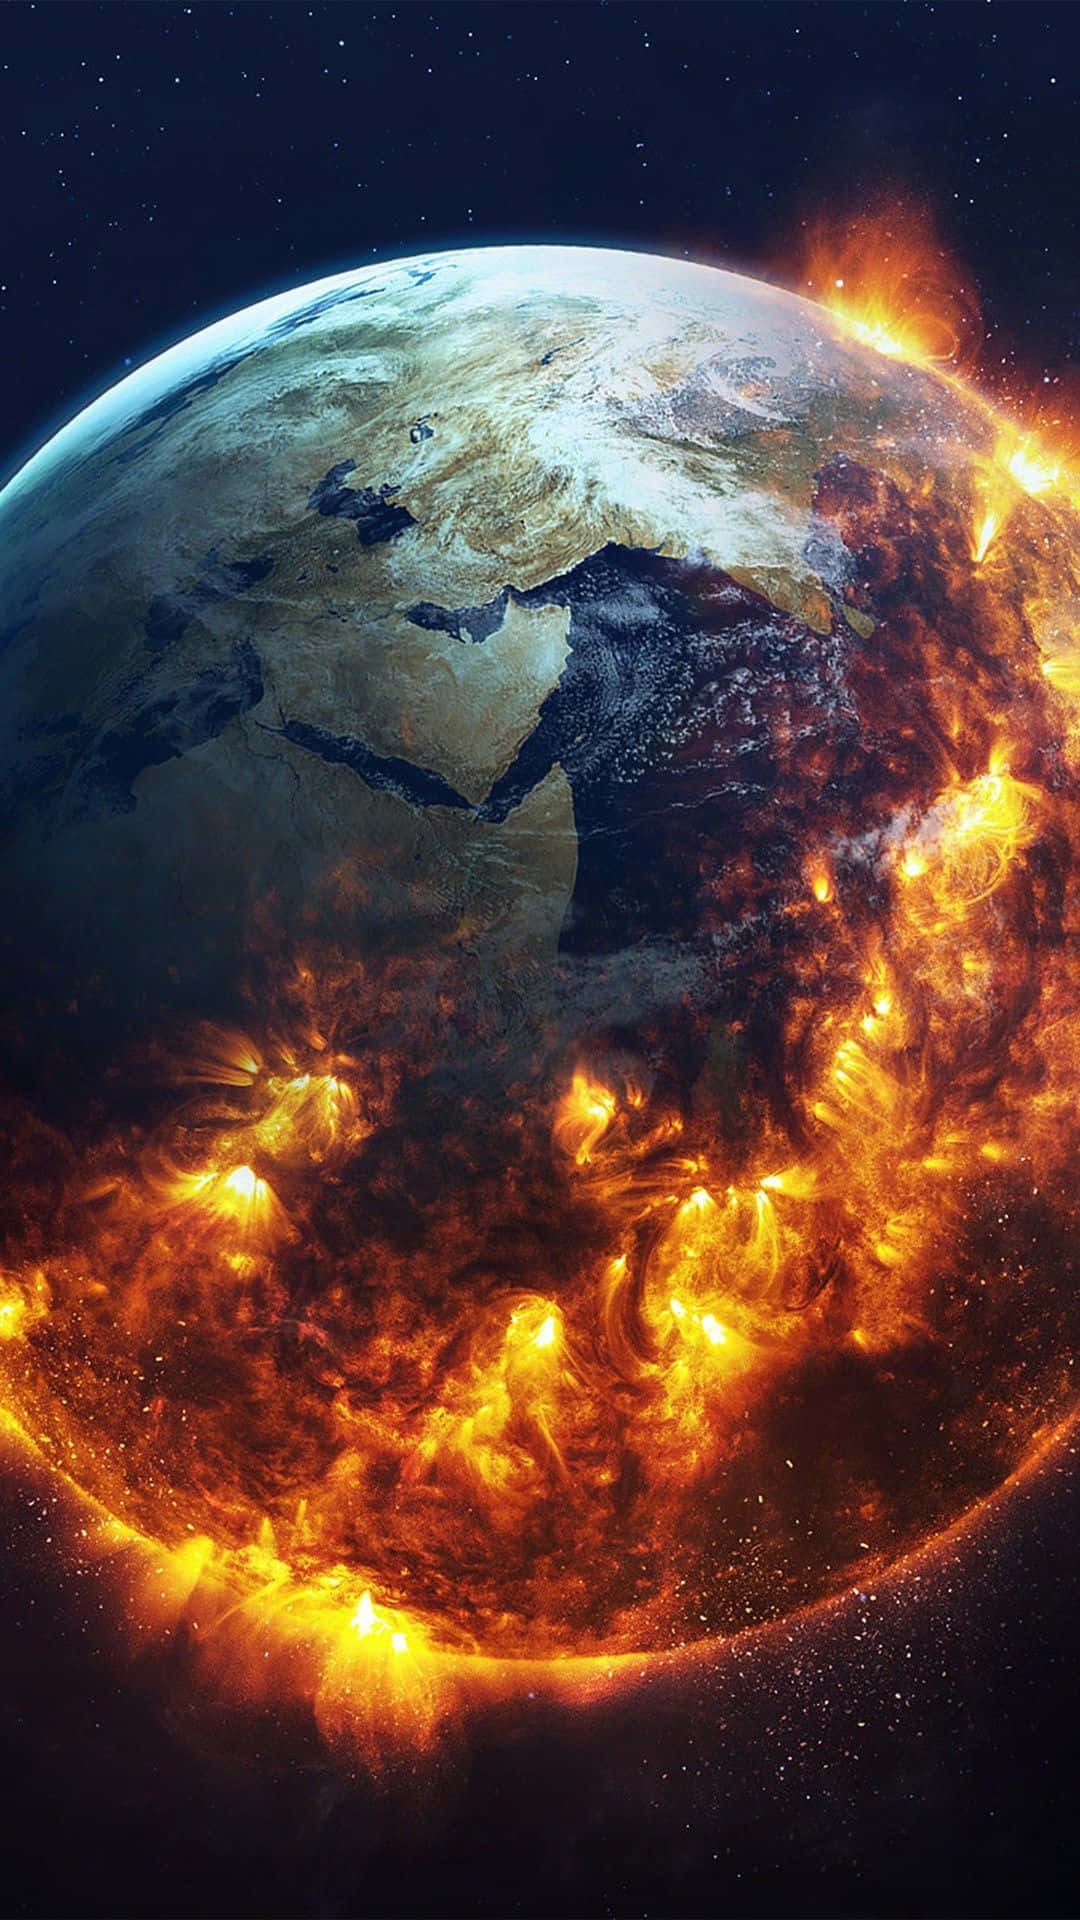 Iphoneder Planet Erde Geht In Flammen Auf. Wallpaper